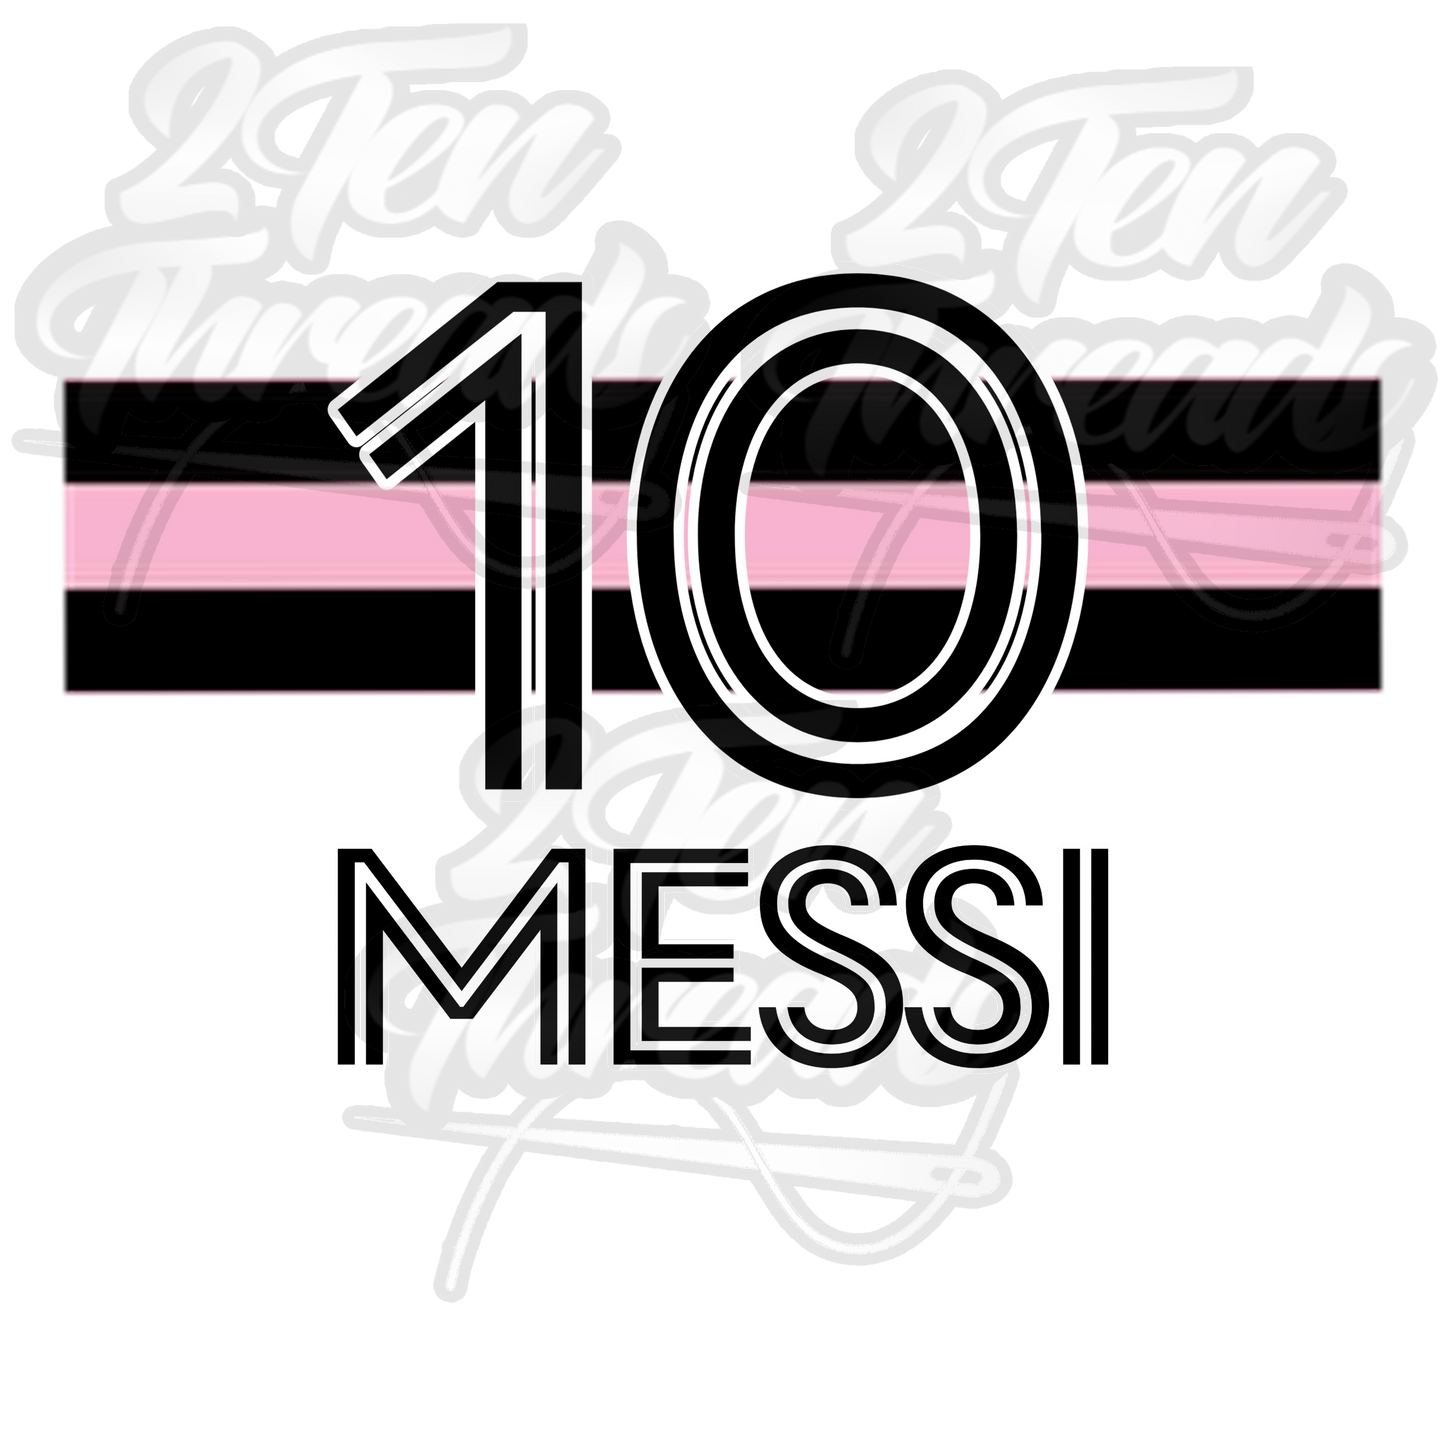 Messi 10 Shirts Custom Miami Inter CF